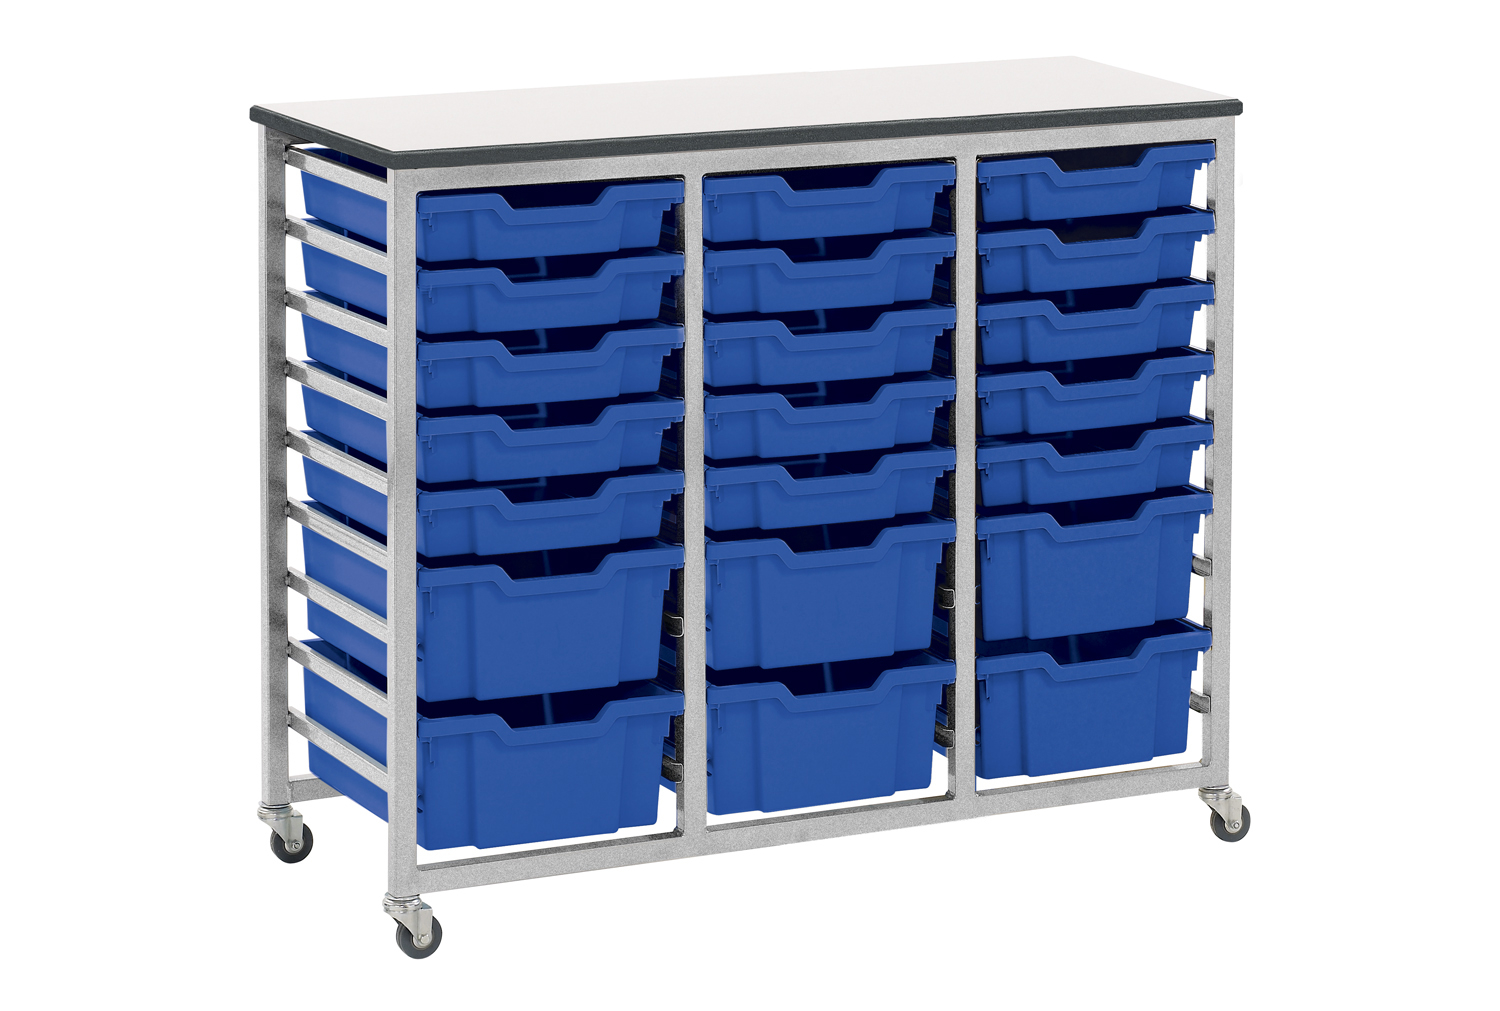 Metalliform Triple Column Metal Classroom Tray Storage Unit Only (Holds 27 Standard Classroom Trays)